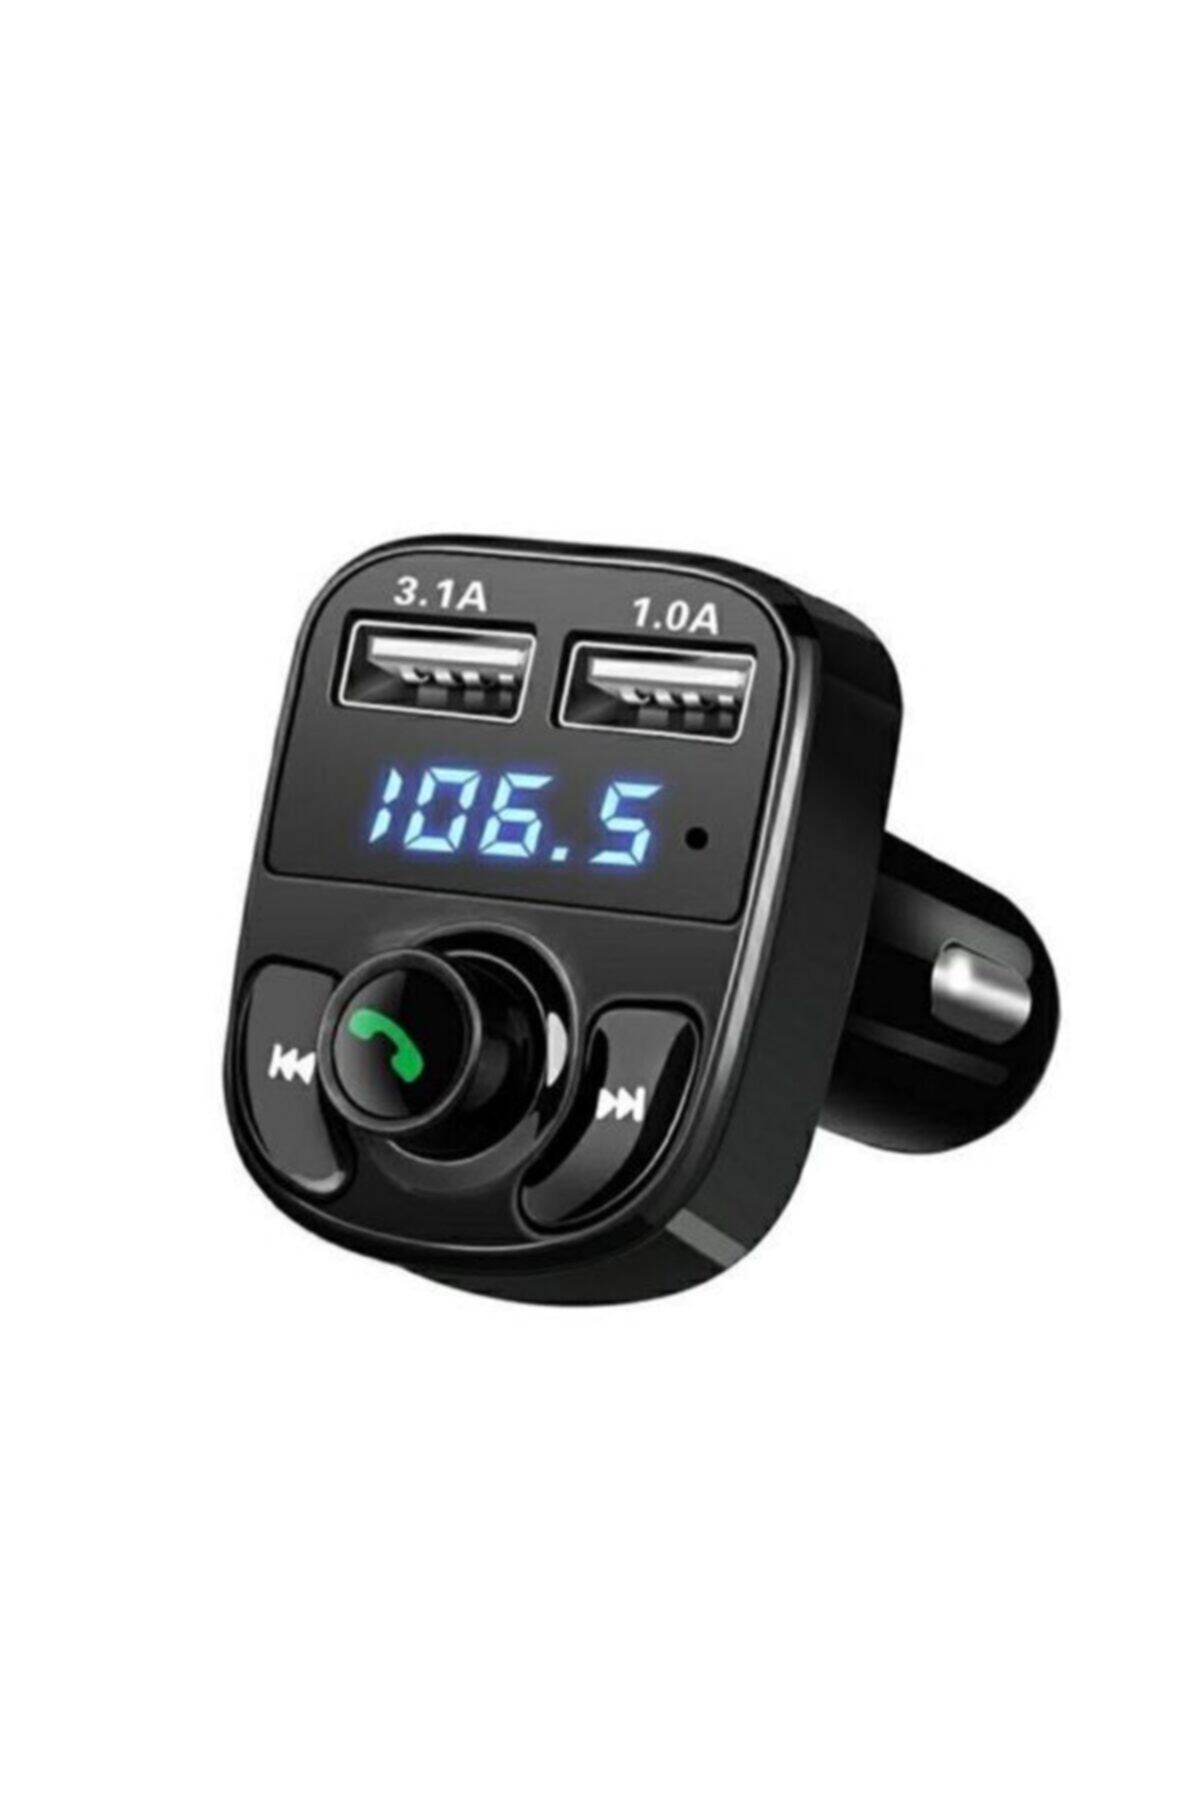 Manessa Carx8 Araç Fm Transmitter Bluetooth Usb Mp3 Sd Kart Çakmaklık Girişli Oto Müzik Çalar Kiti